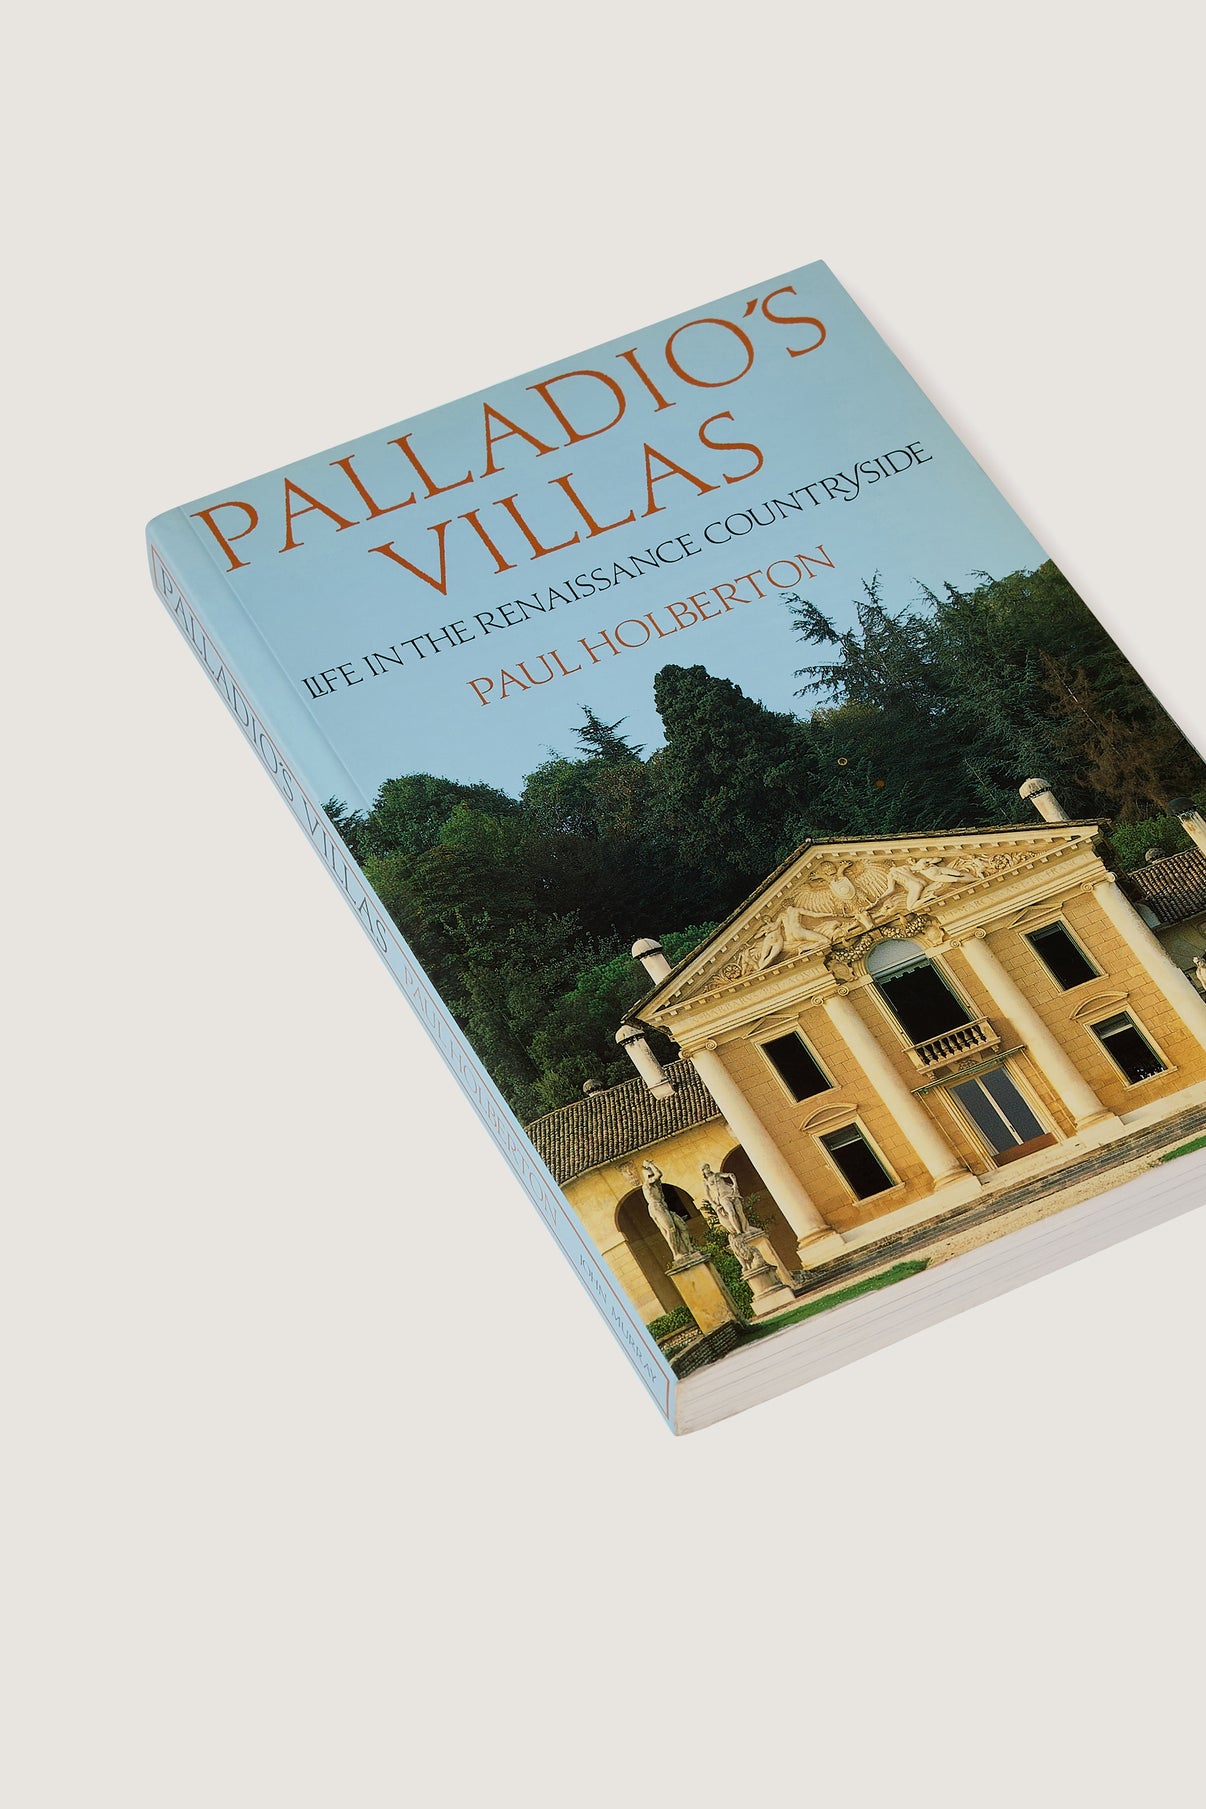 BOOK "PALLADIO'S VILLAS : LIFE IN THE RENAISSANCE COUNTRYSIDE" vue 2